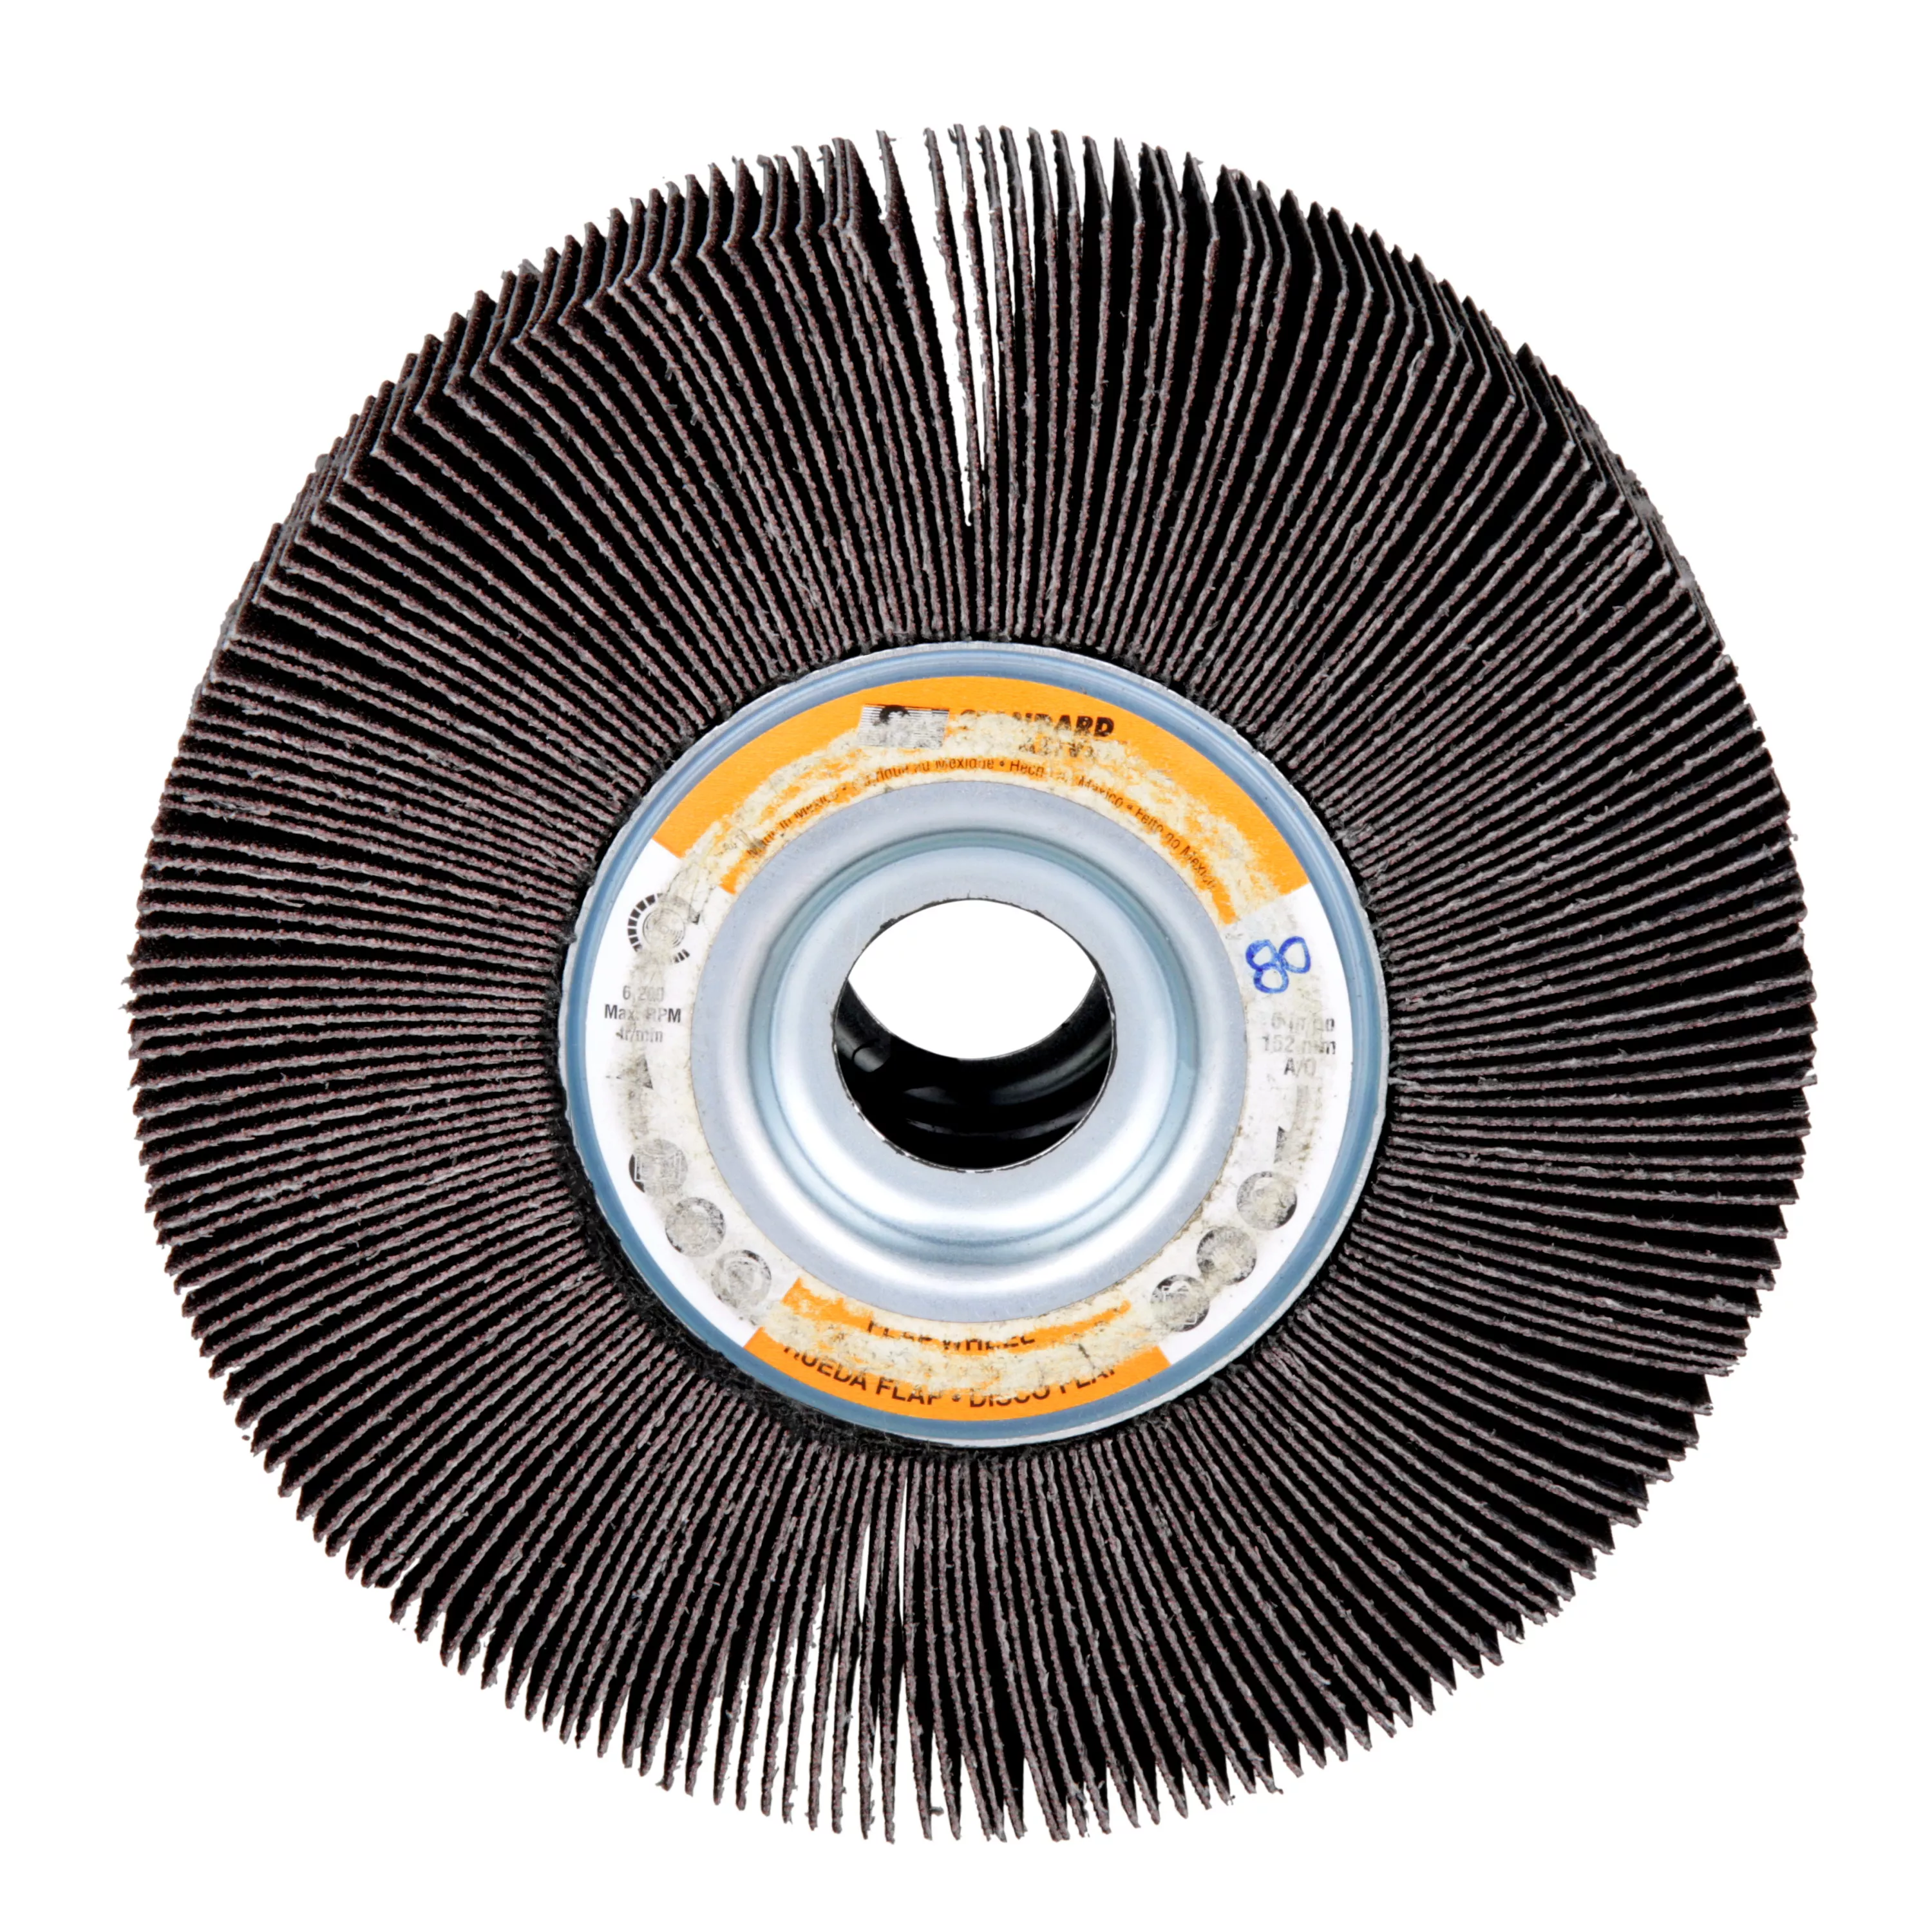 SKU 7000122216 | Standard Abrasives™ Aluminum Oxide Flap Wheel